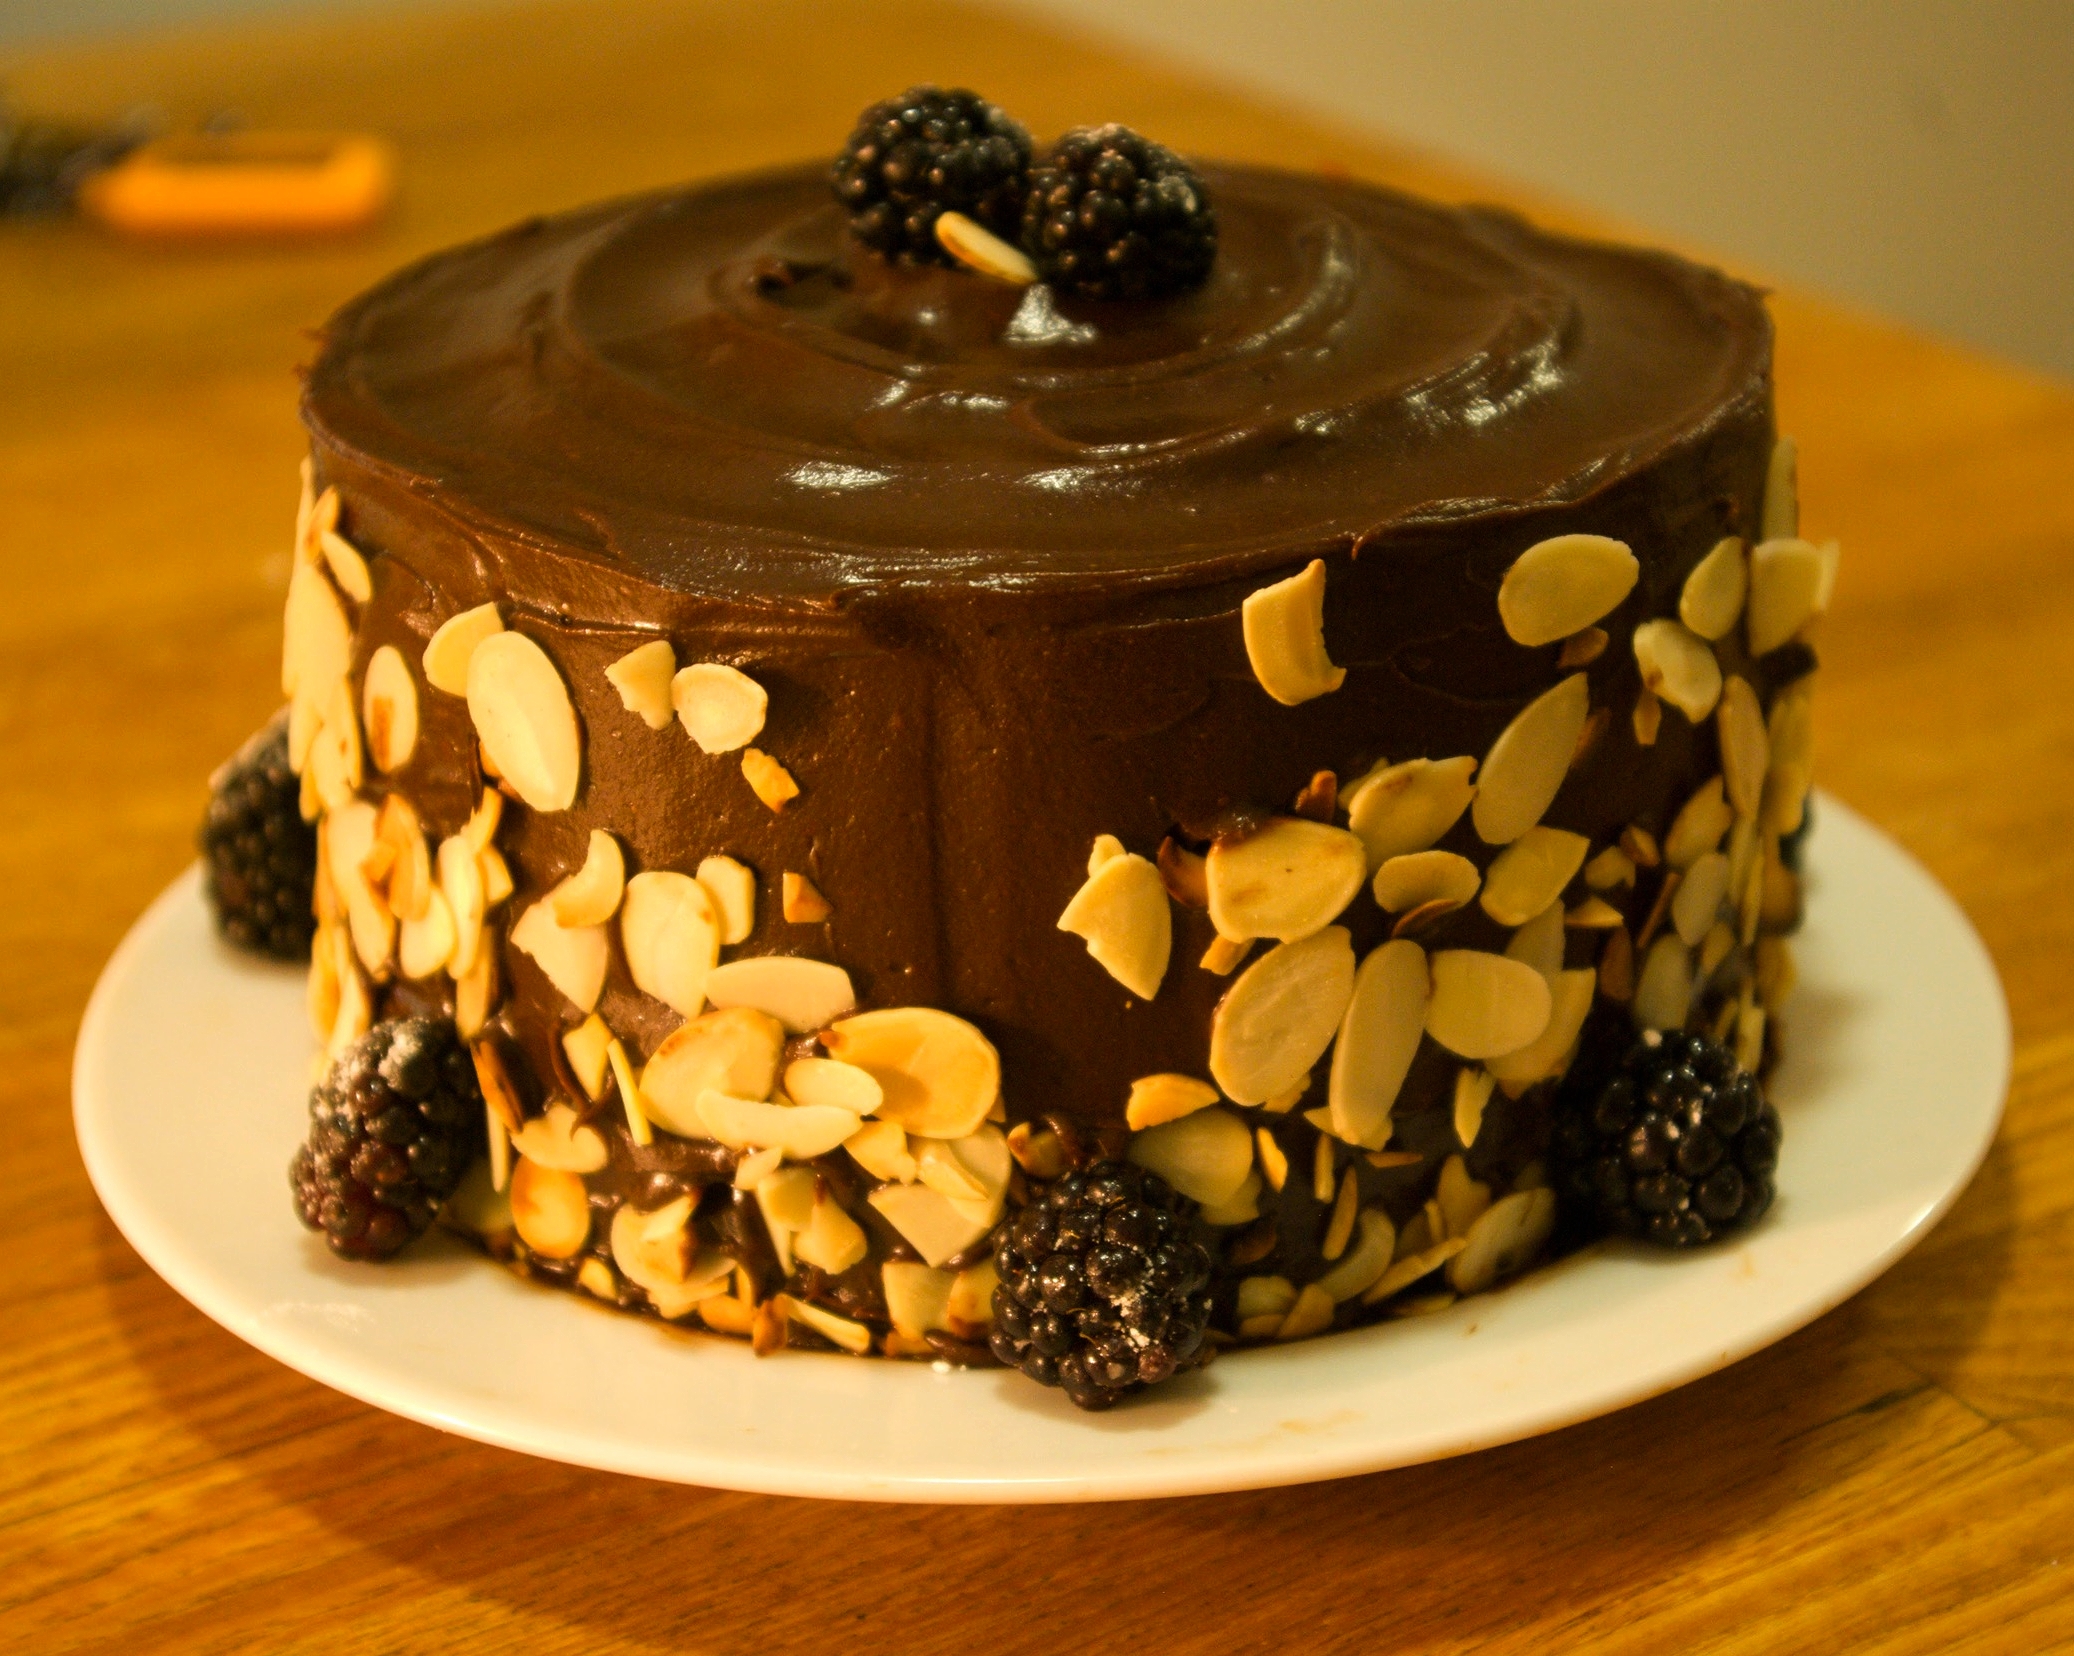 Blackberry buttermilk spice cake with bittersweet chocolate ganache